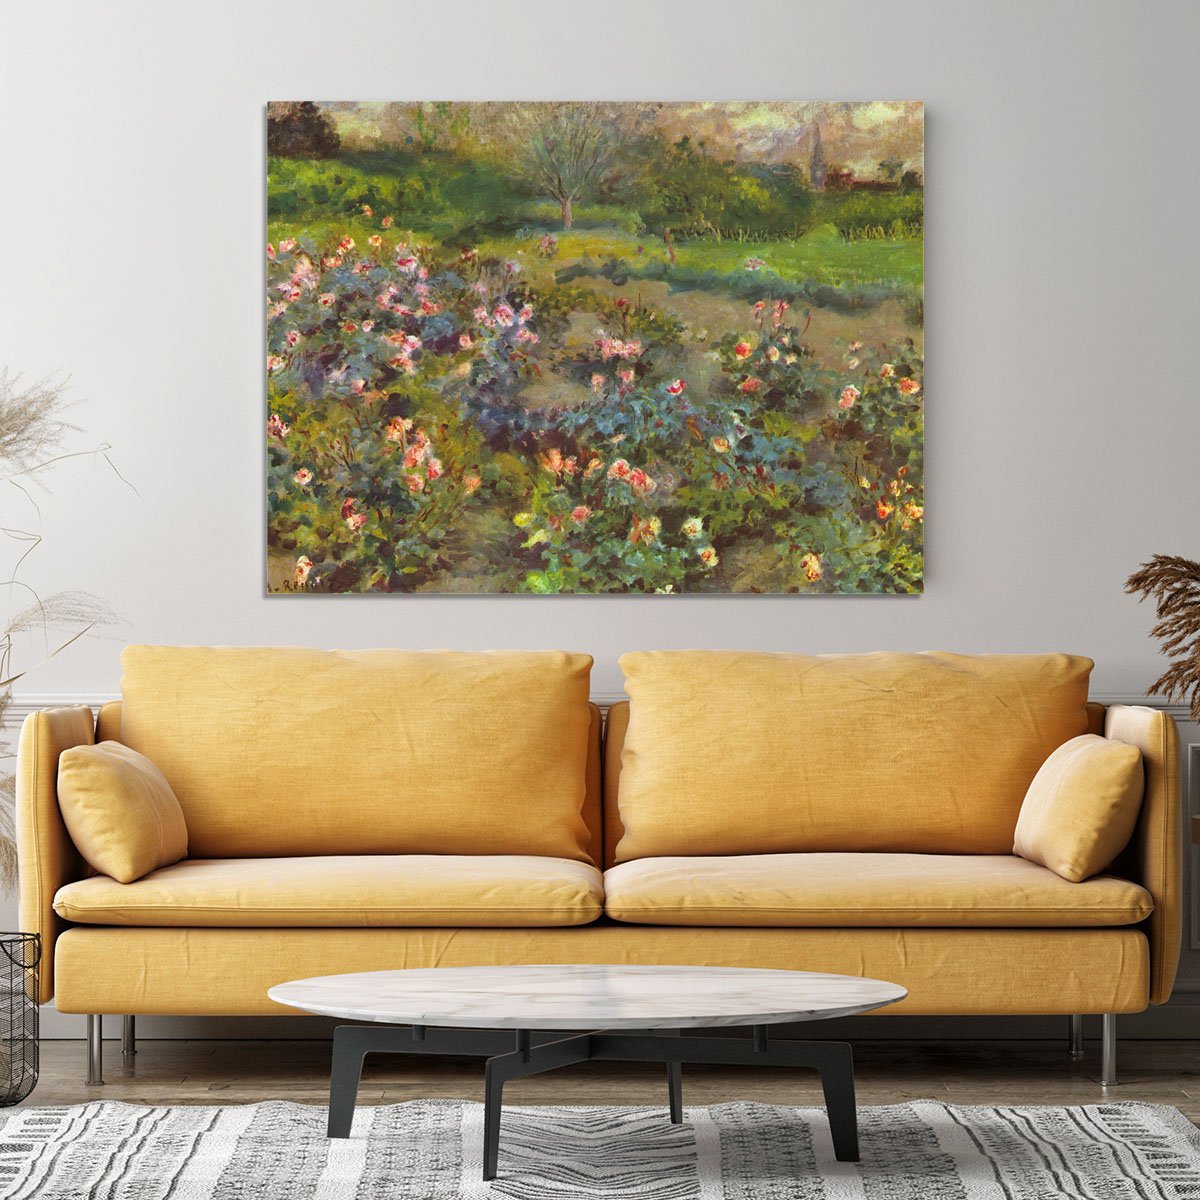 Rose Garden by Renoir Canvas Print or Poster